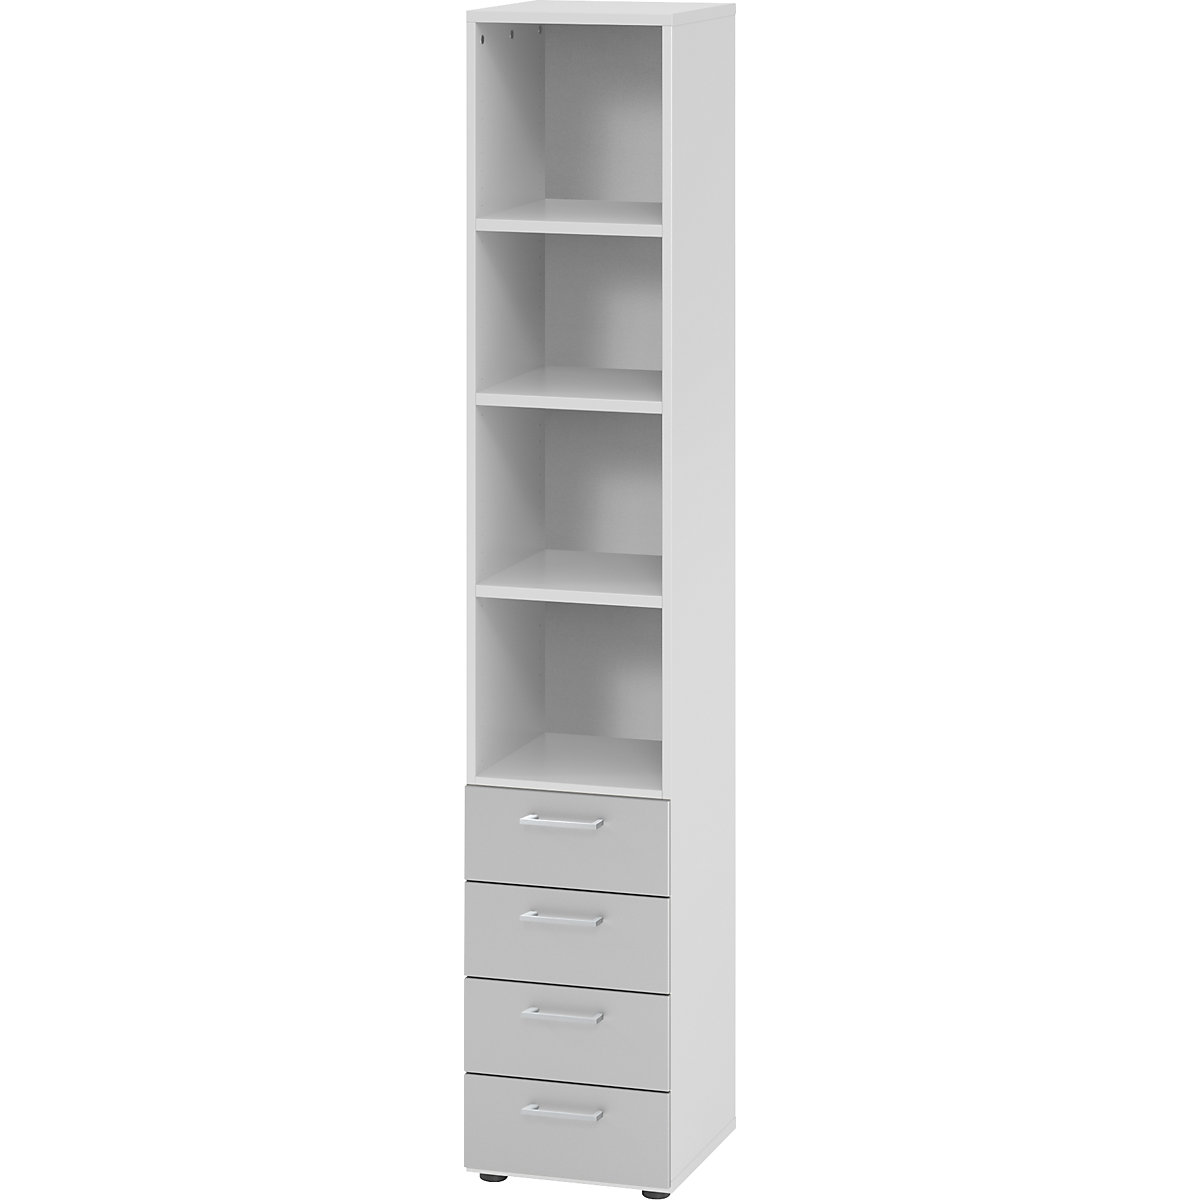 Shelf unit RENATUS – eurokraft pro, 3 shelves / 4 drawers, silver coloured, light grey-11